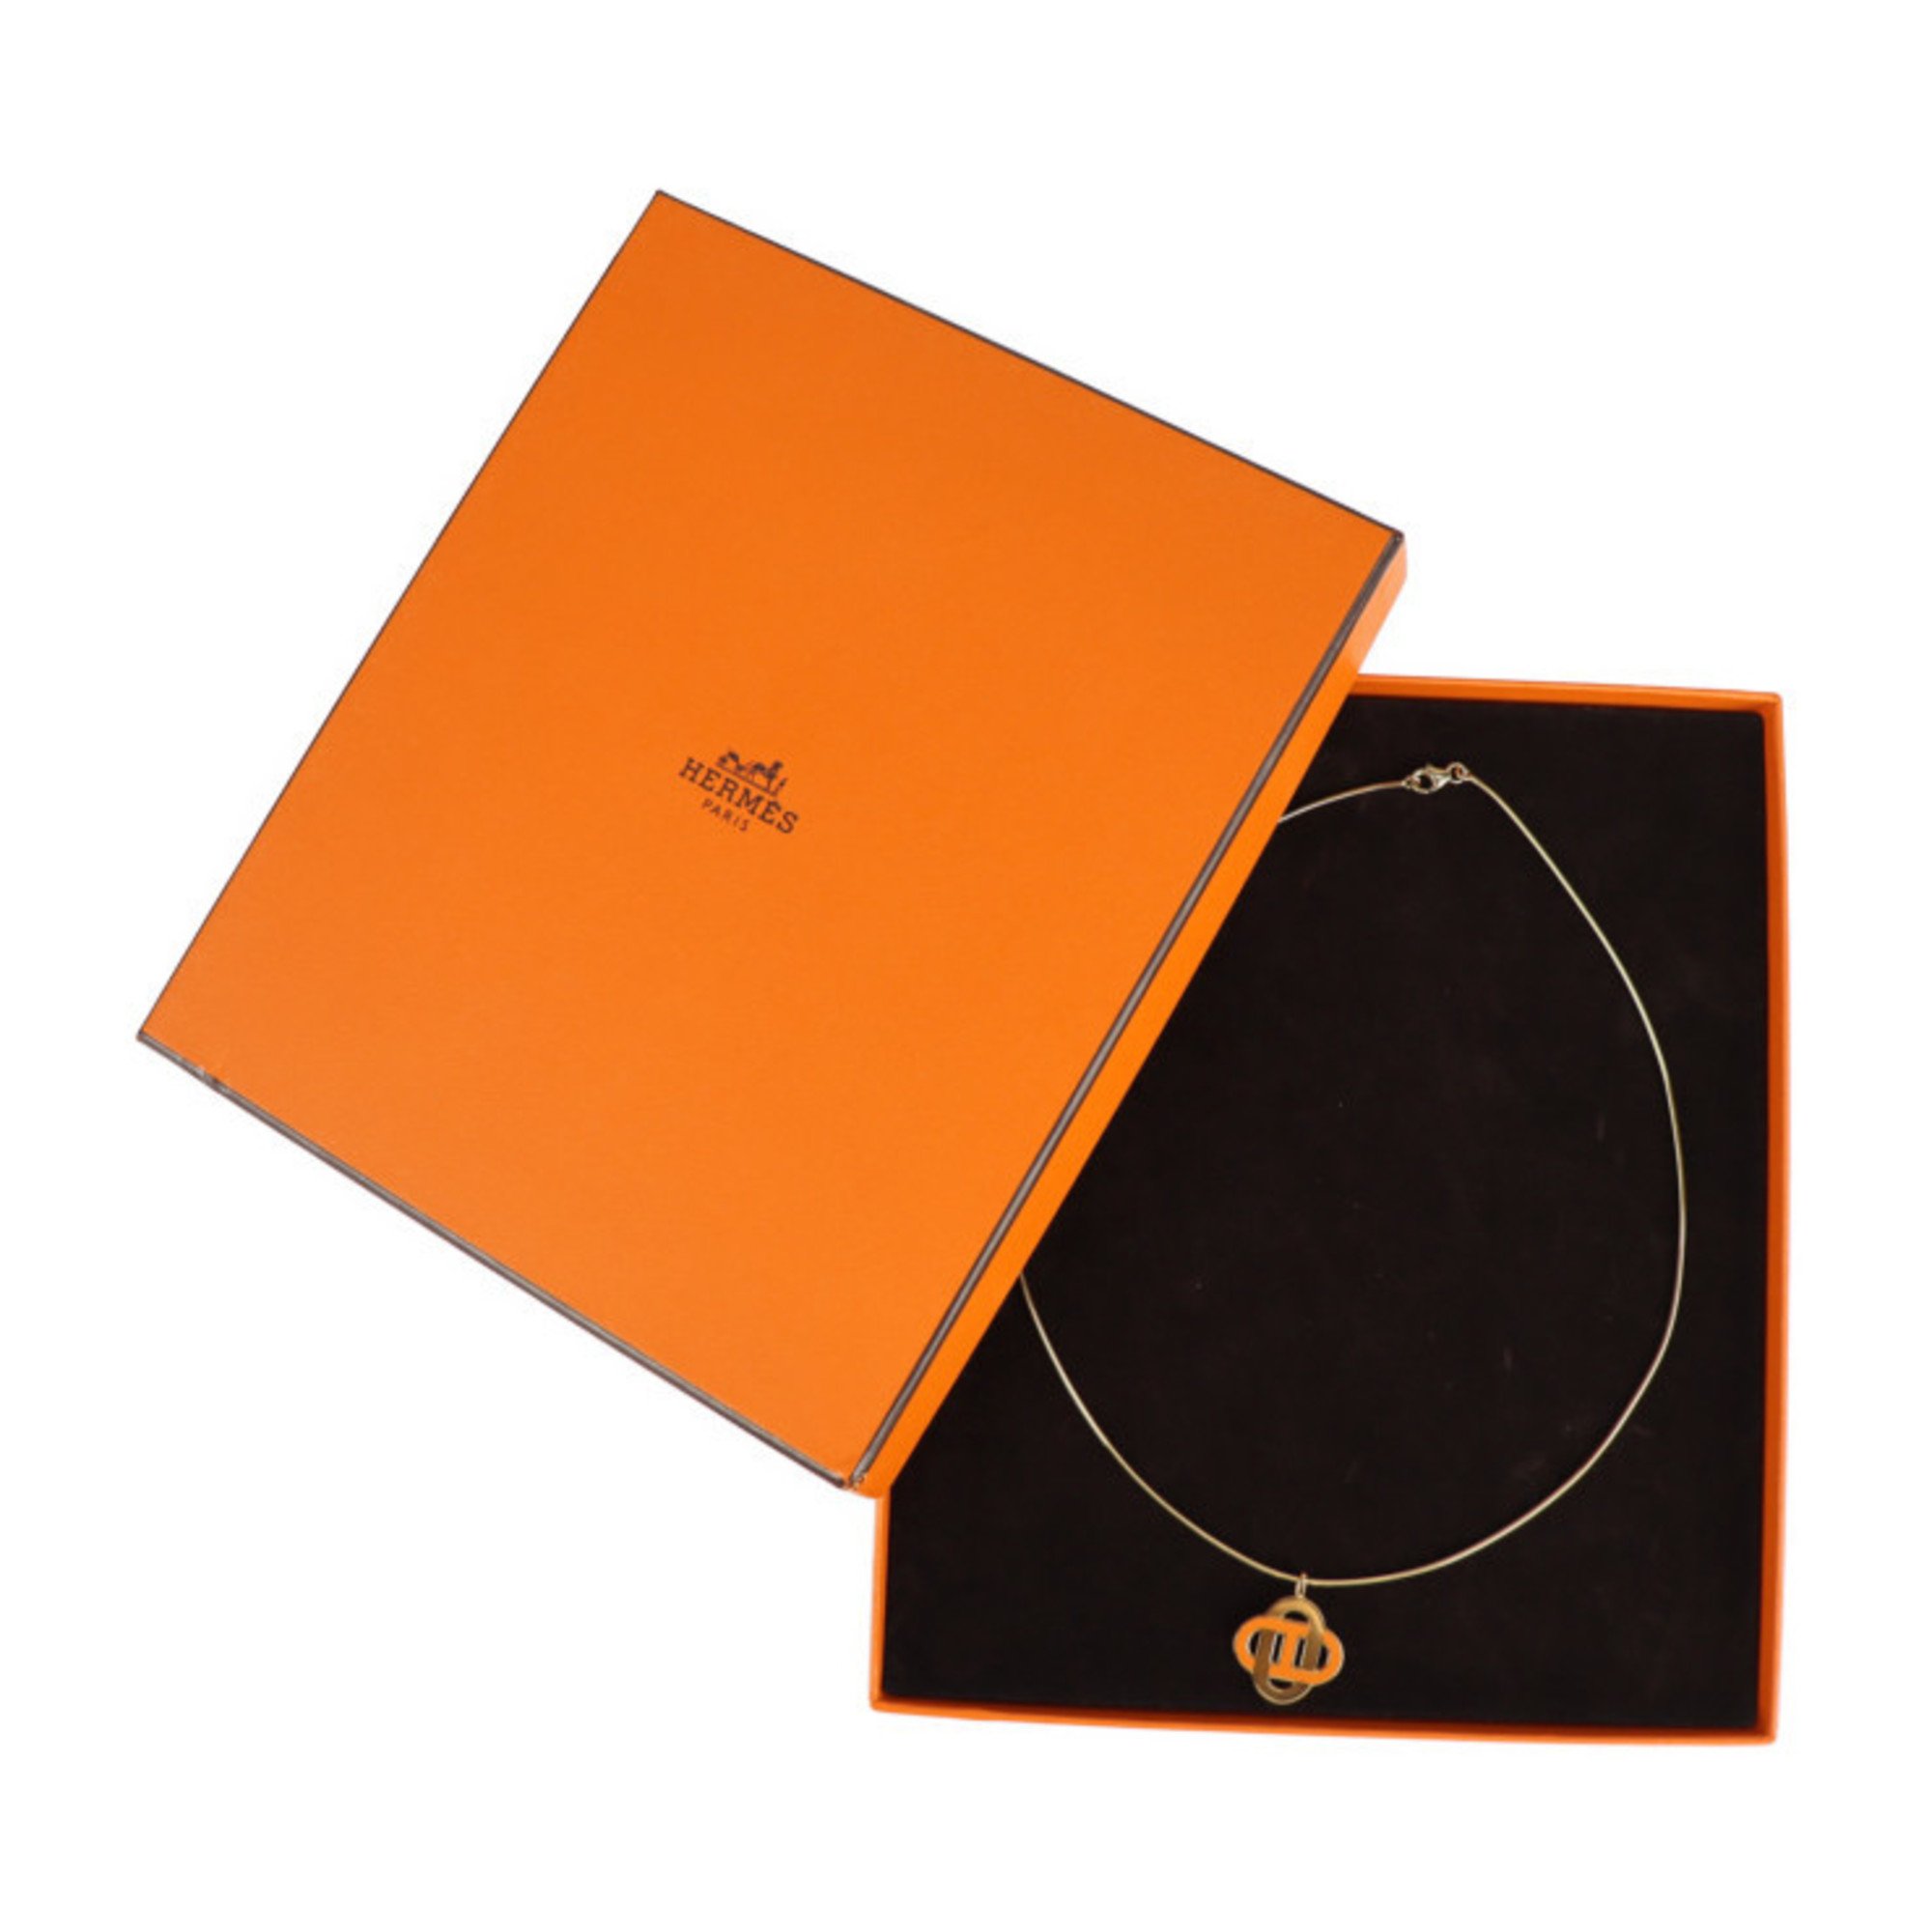 HERMES Hermès Shane d'Ancle Isatis Necklace Metal Gold Orange Pendant